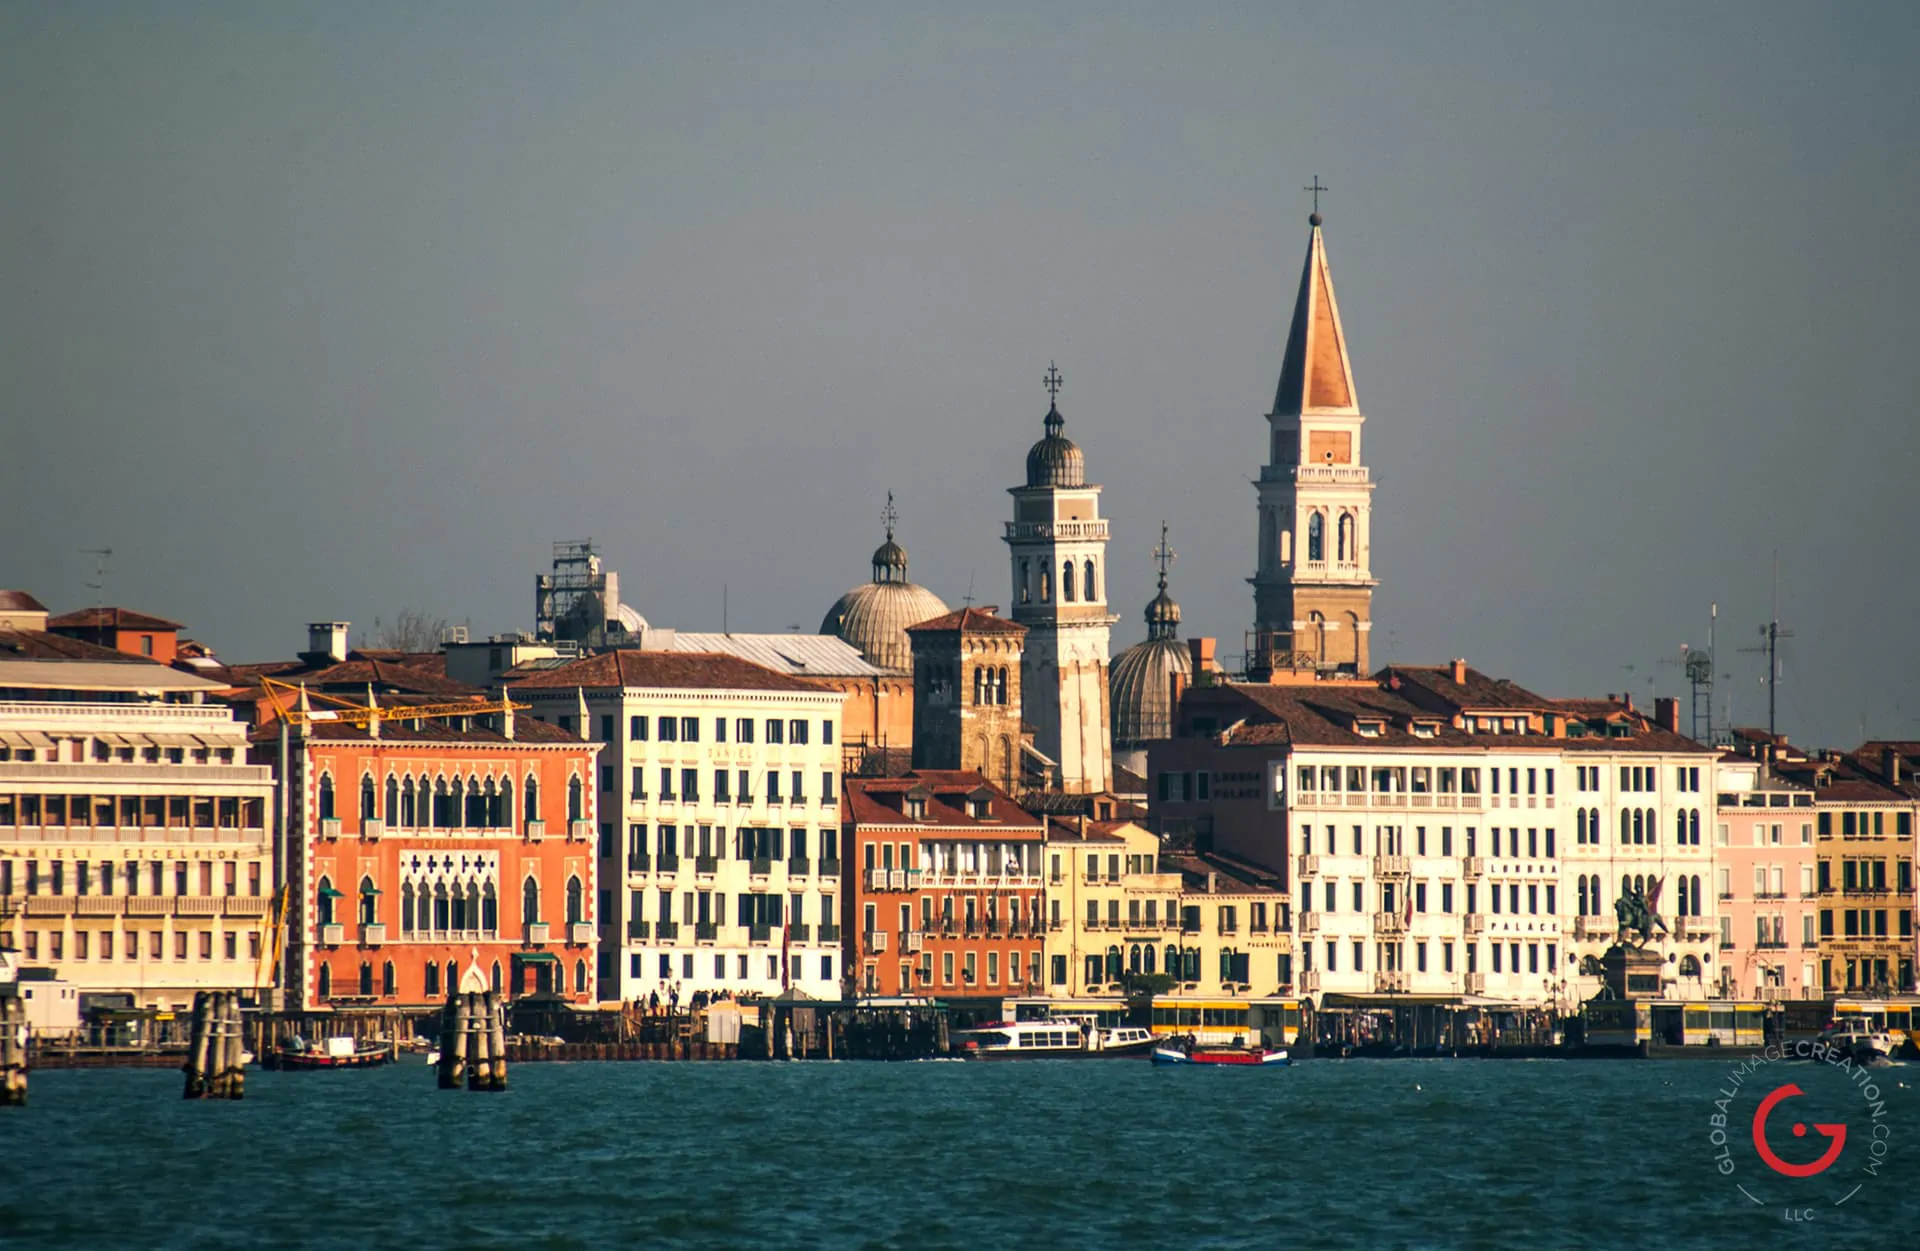 Luxury Hotel Danieli in the Venice Skyline from the Venetian Lagoon